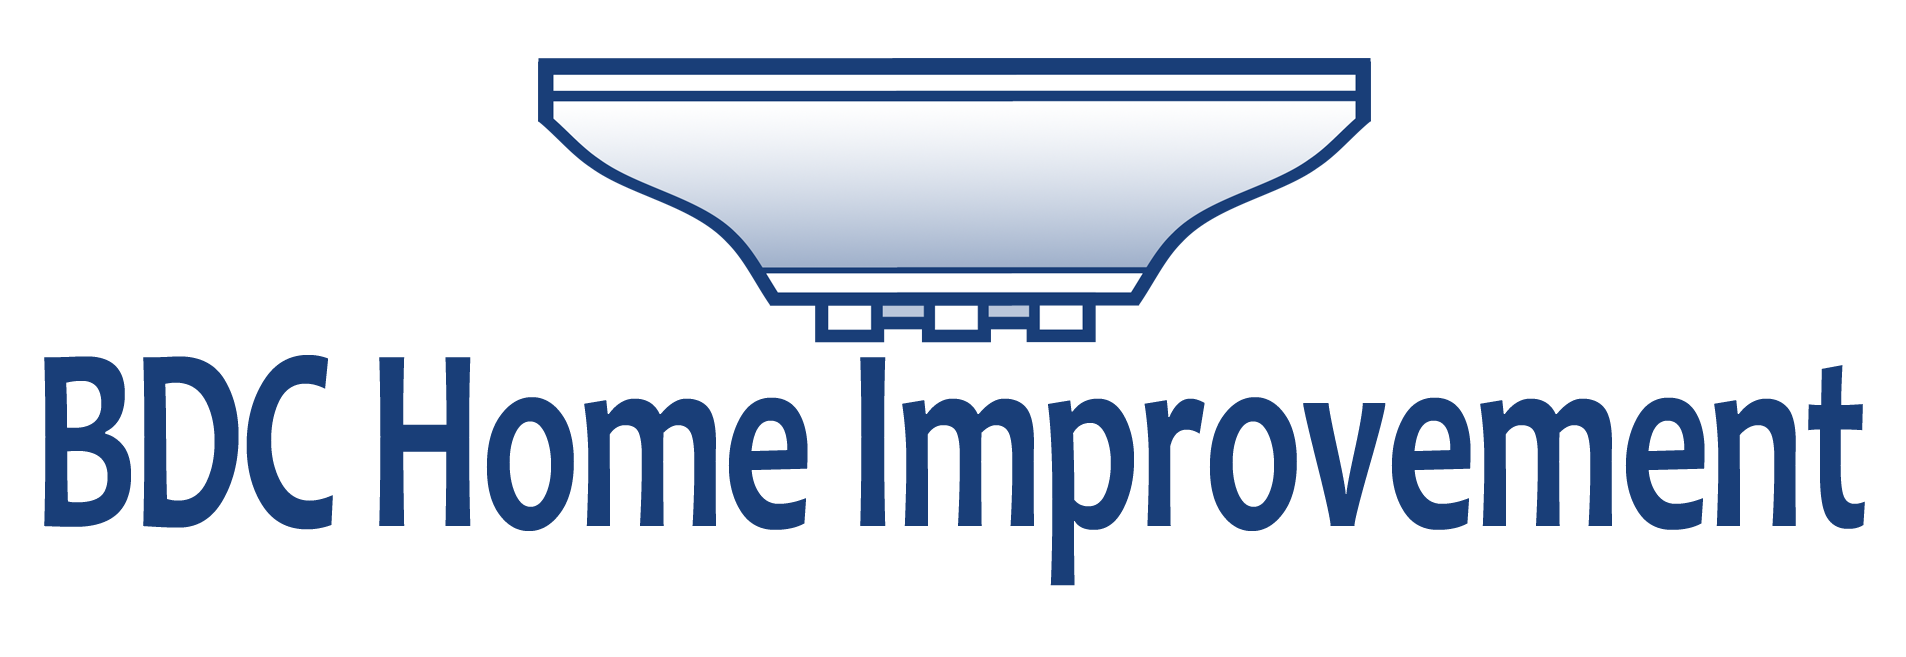 BDC Home improvement Logo